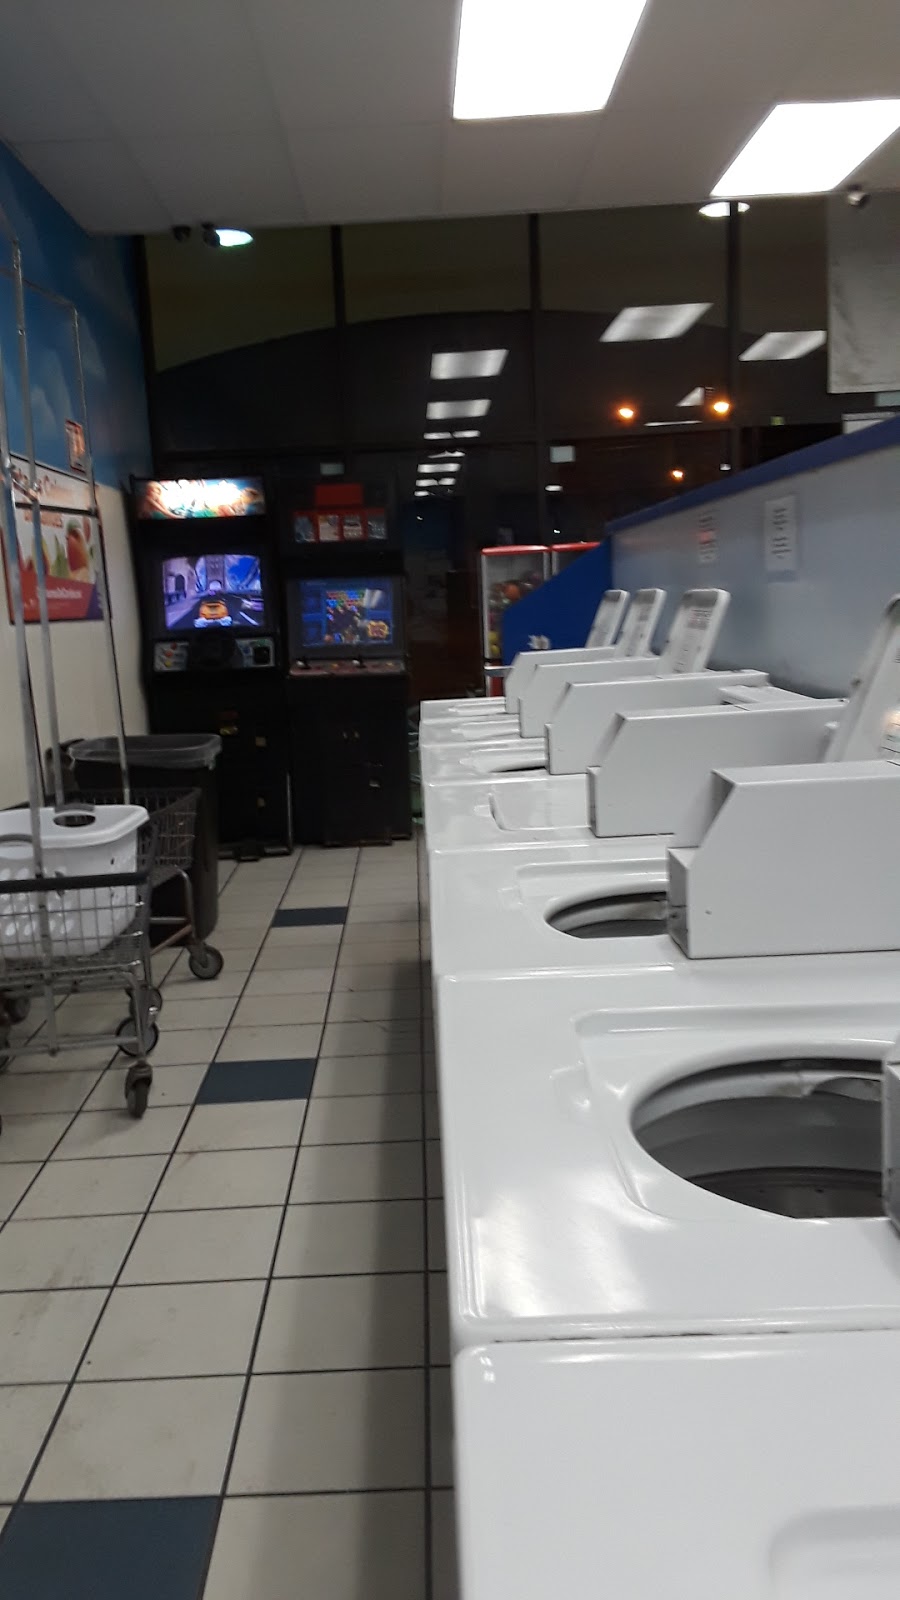 Speed Wash Laundry | 6266 Van Buren Boulevard, Riverside, CA 92503, USA | Phone: (951) 307-0444